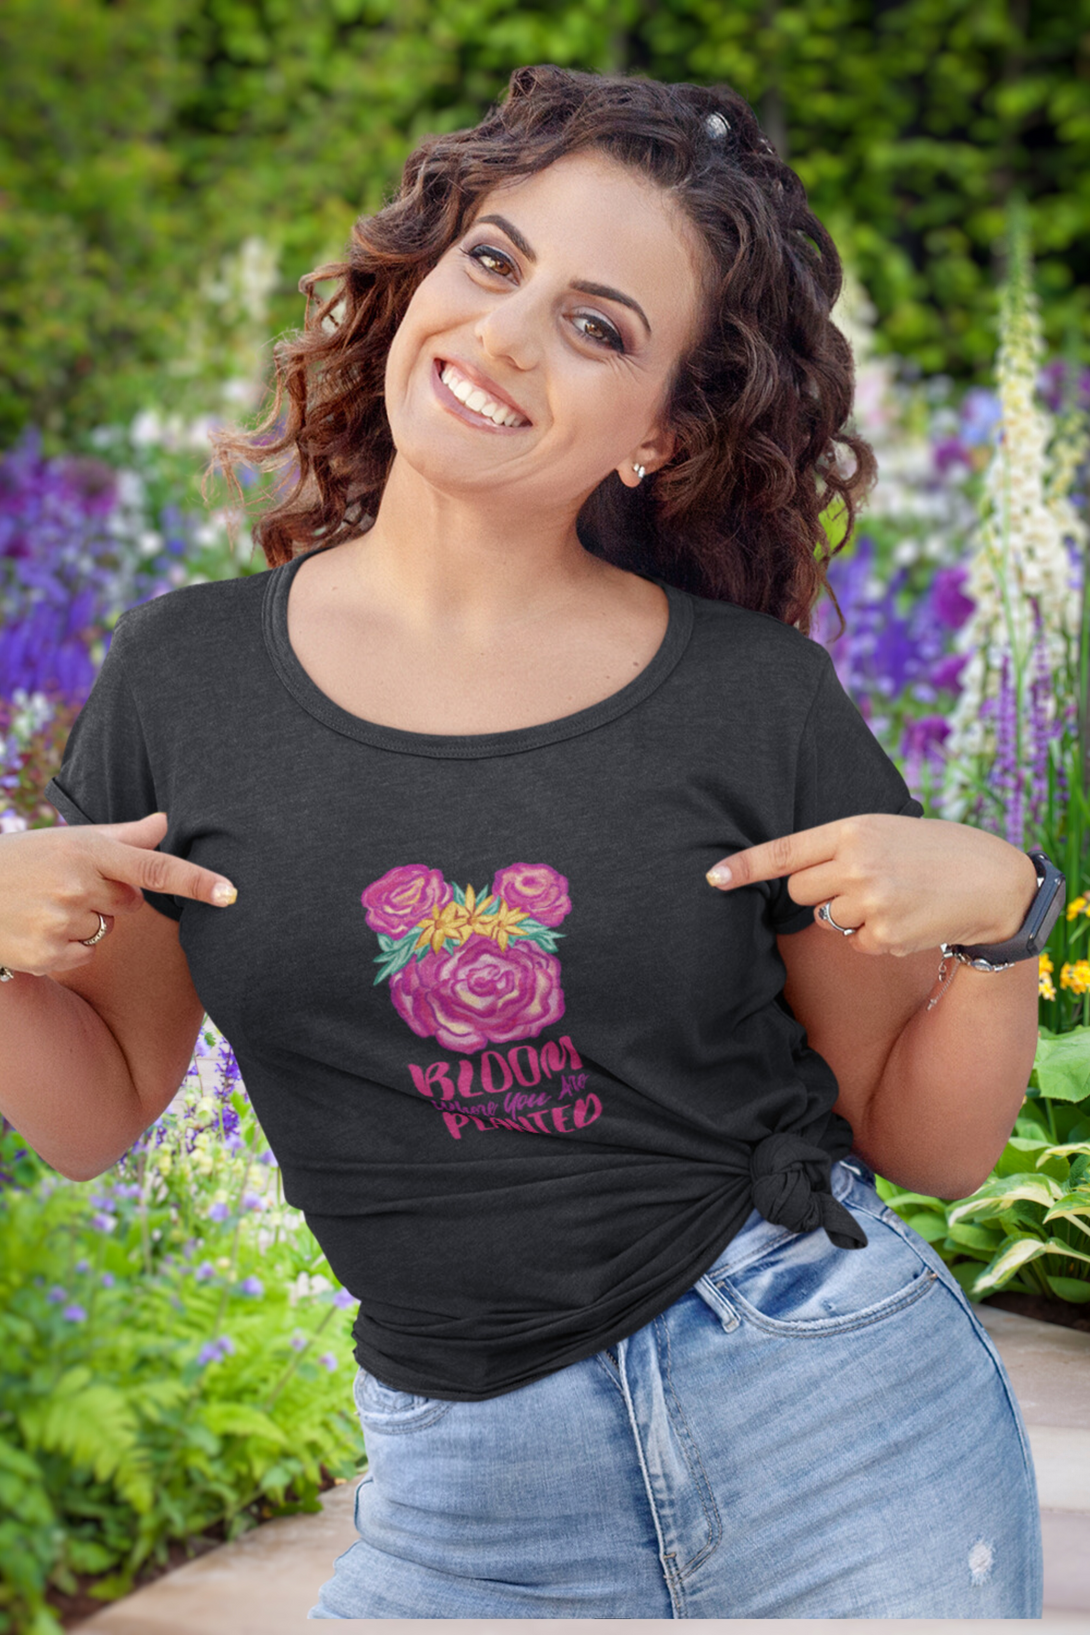 Blooming Flowers Printed Scoop Neck T-Shirt For Women - WowWaves - 3